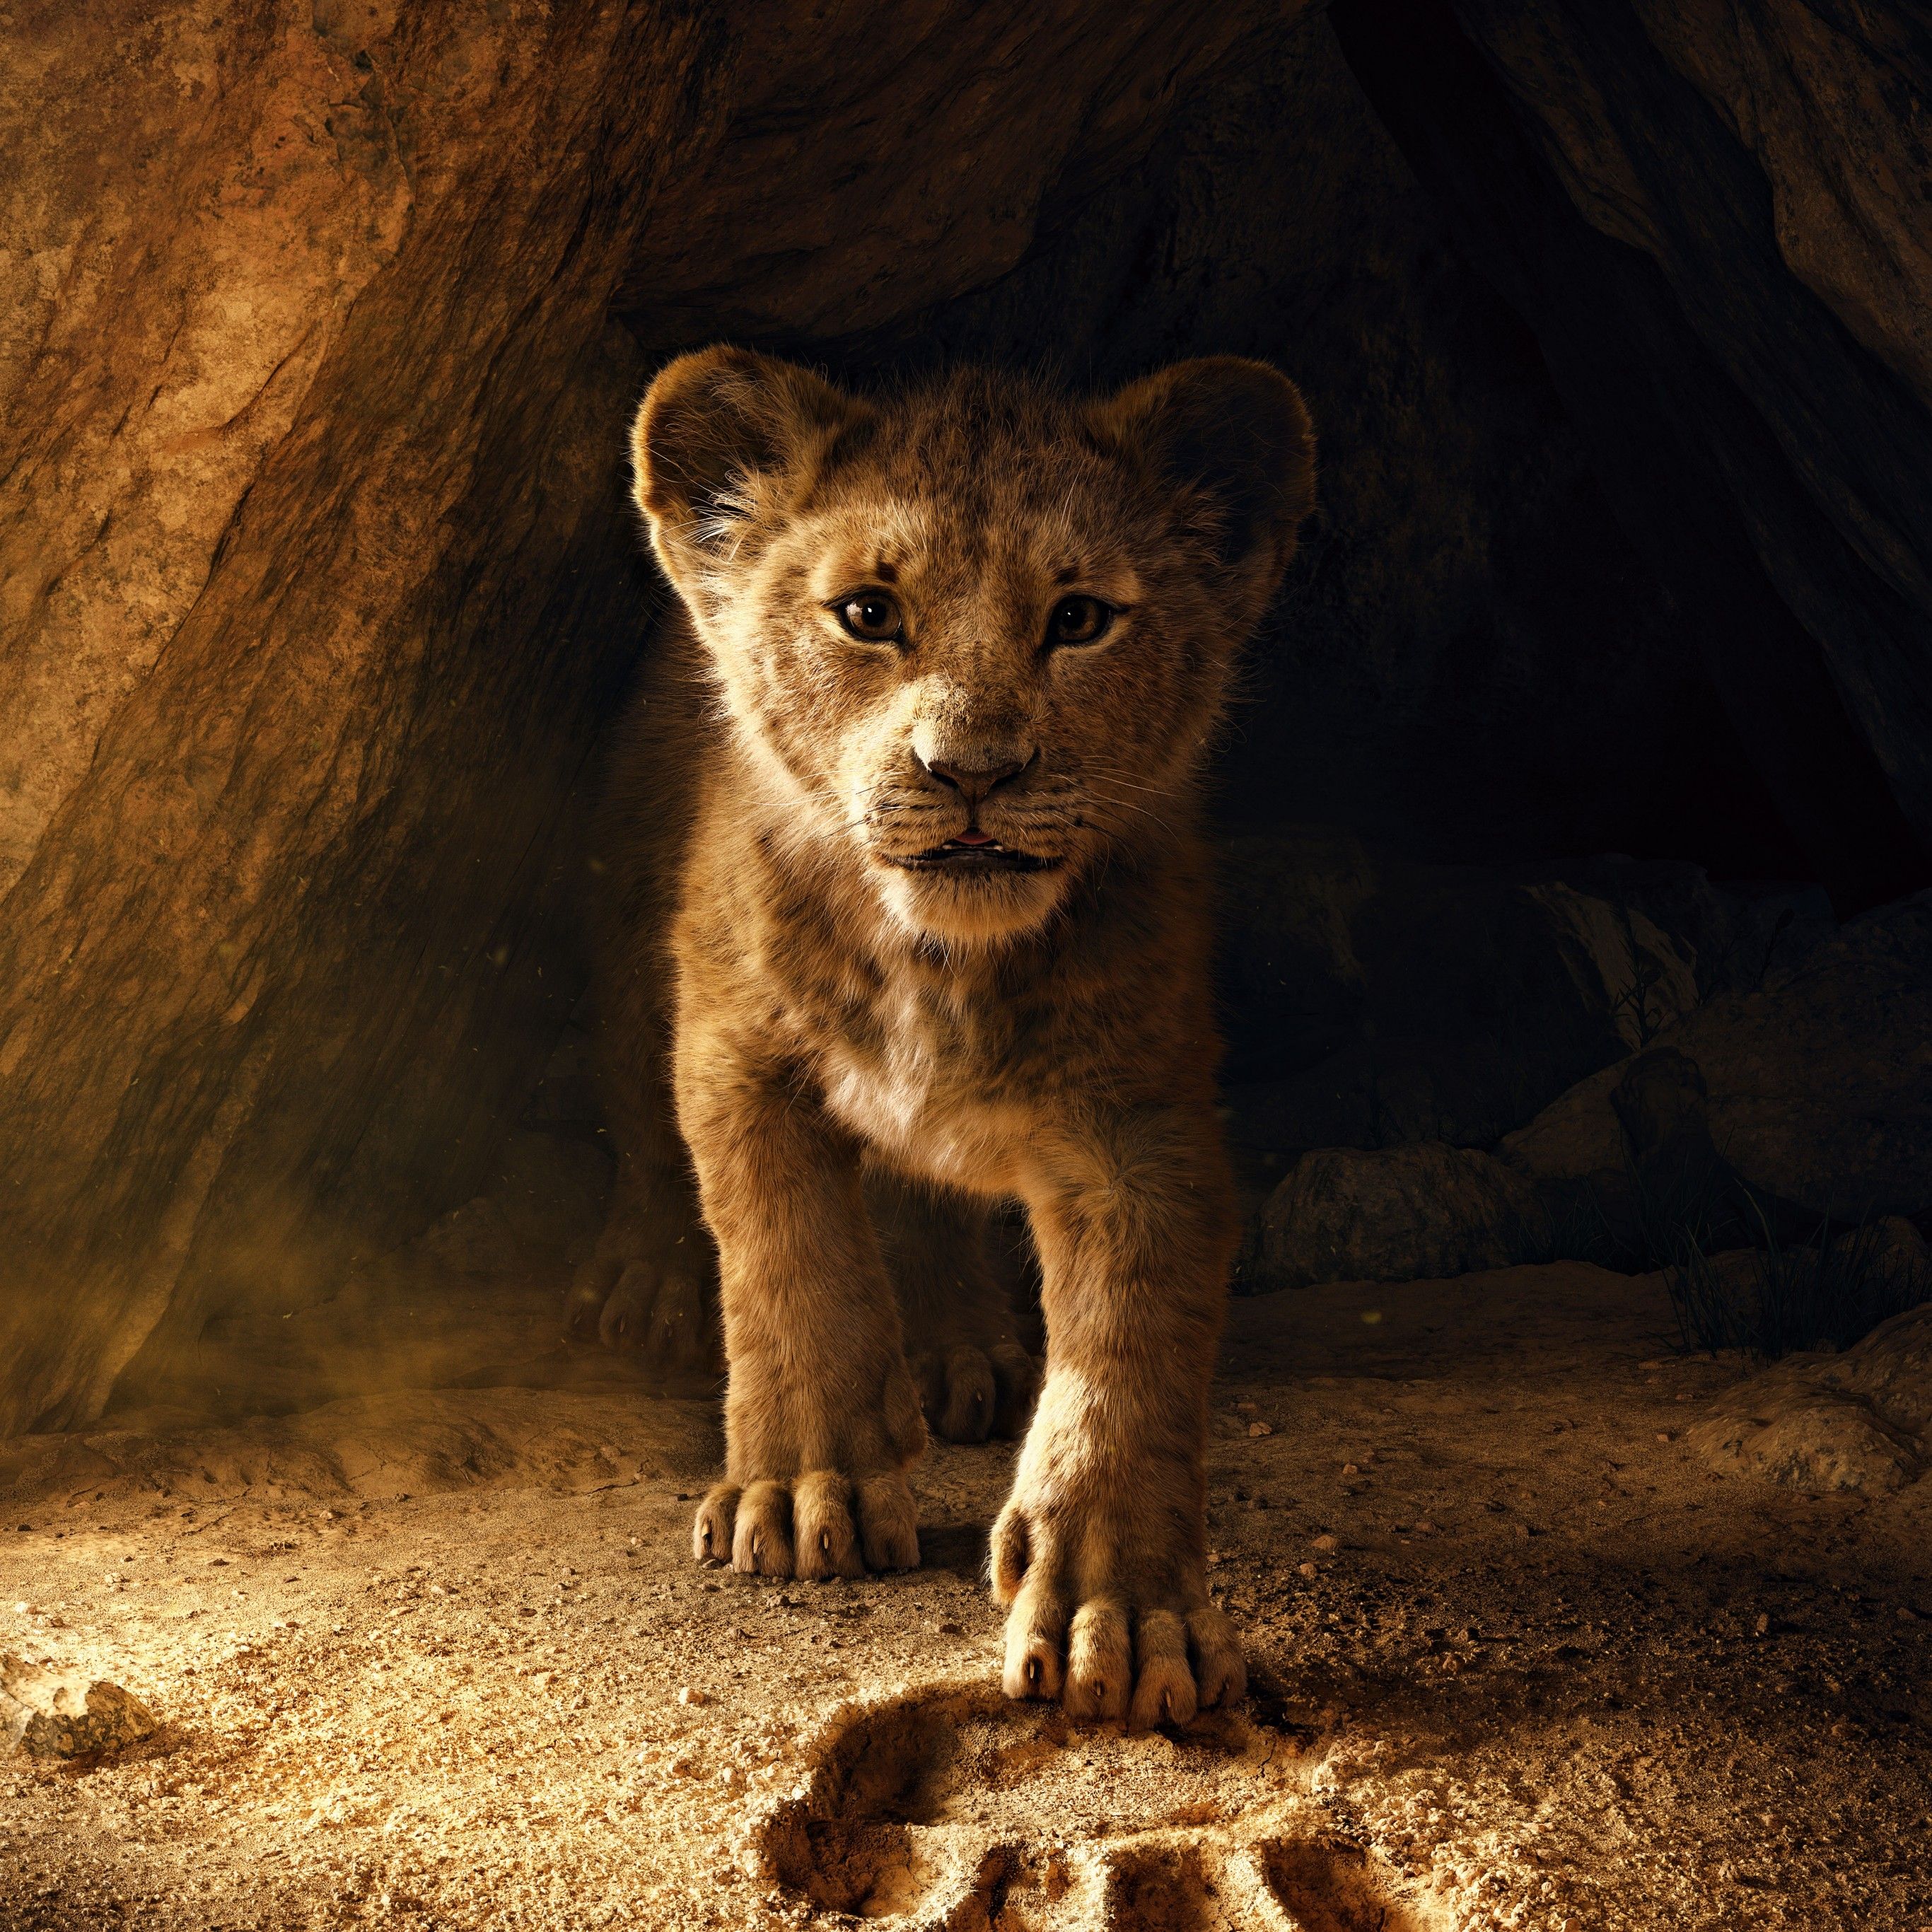 The Lion King 4K Wallpaper, Simba, Lion cub, 5K, Movies,